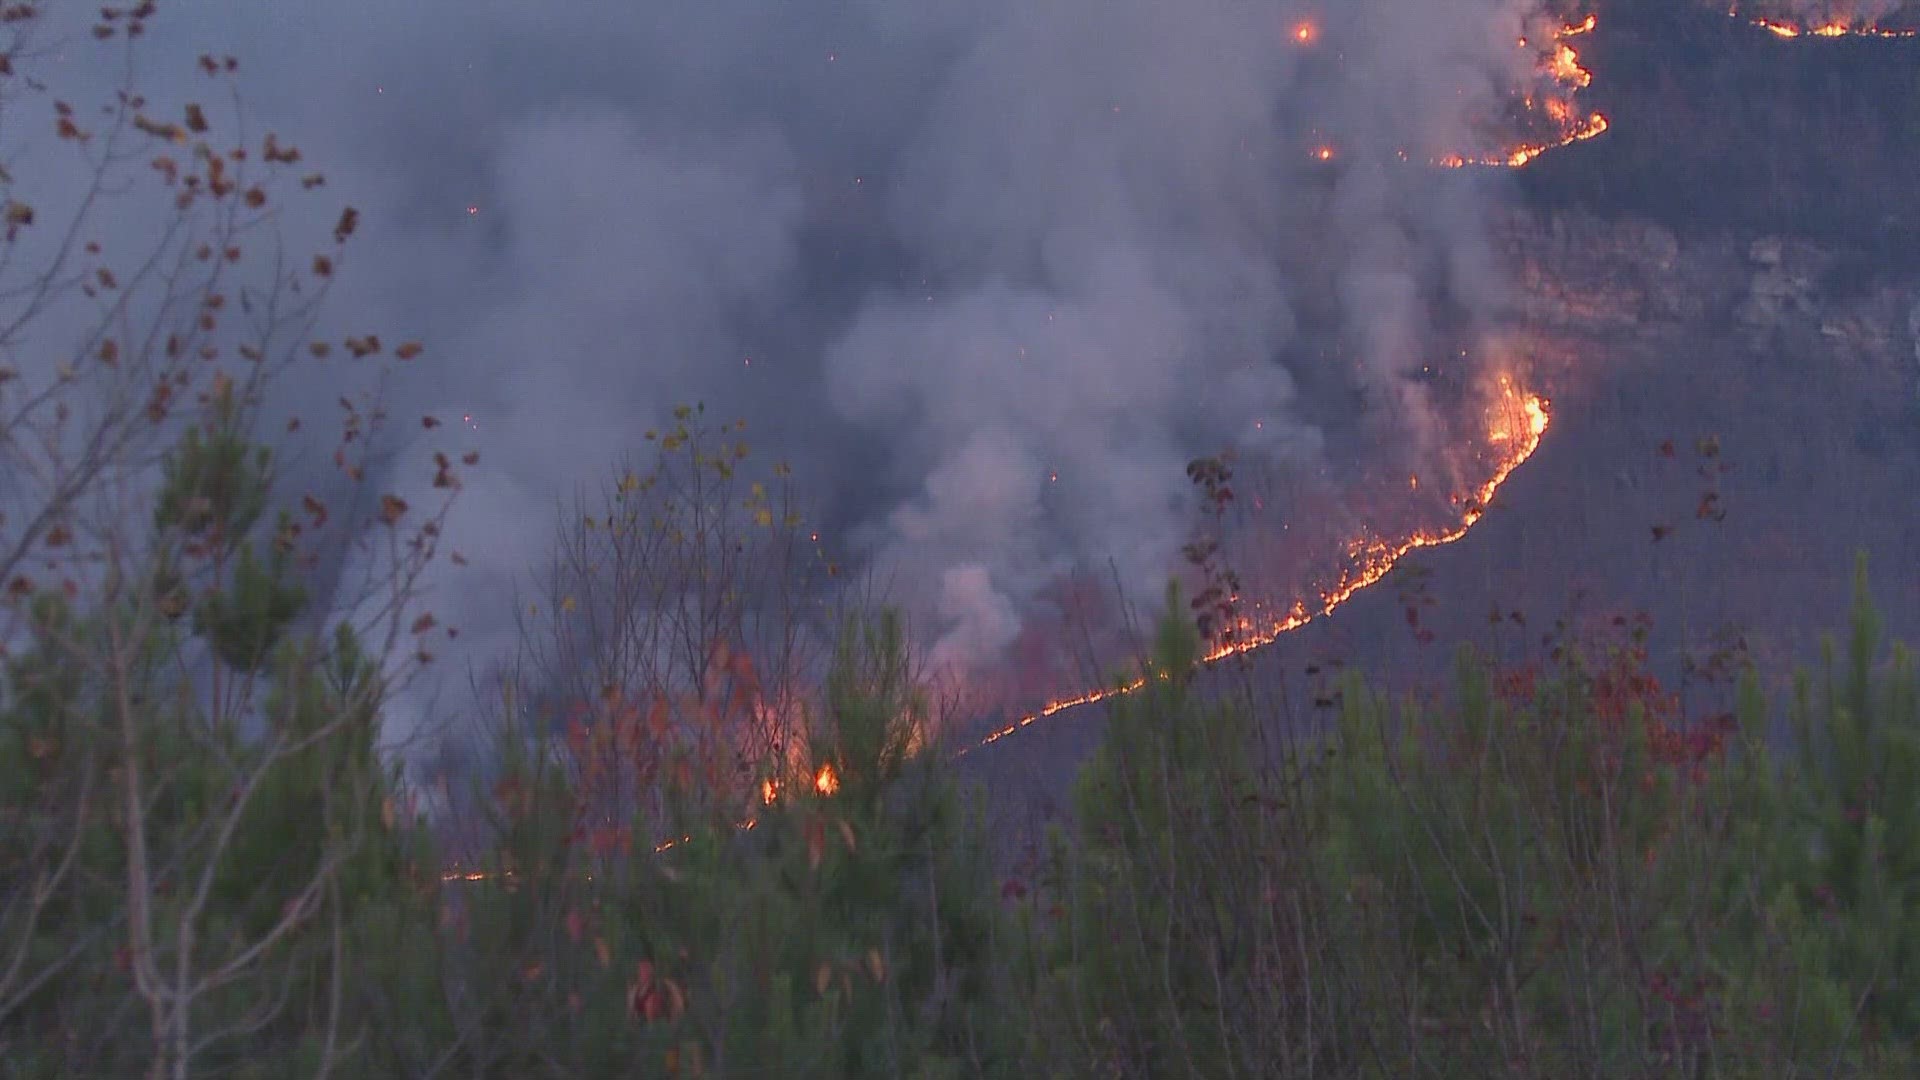 Sauratown Mountain fire grows to over 700 acres